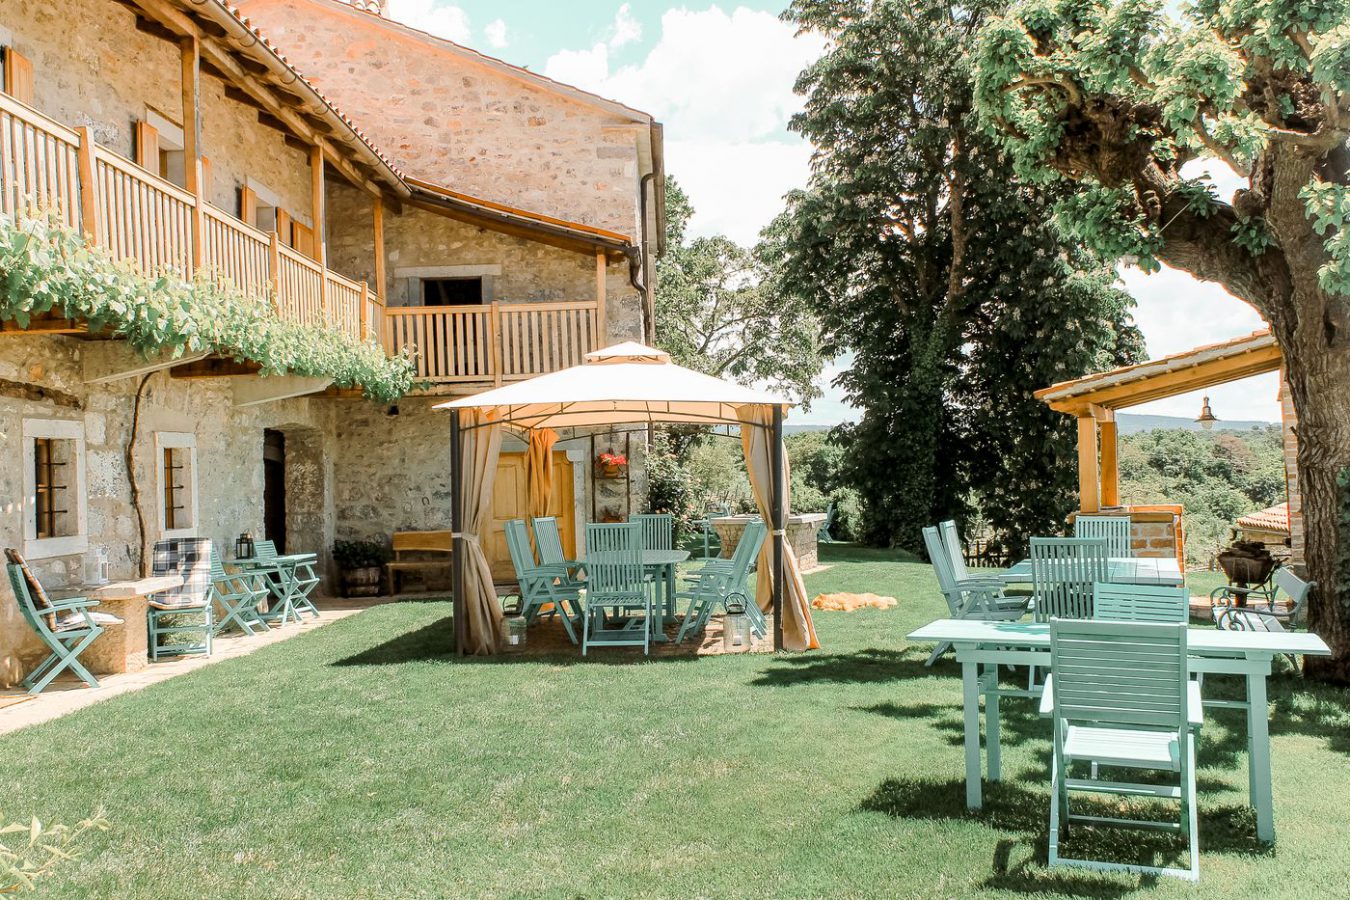 Outdoors Asa Residence Private Villa Kras Slovenia